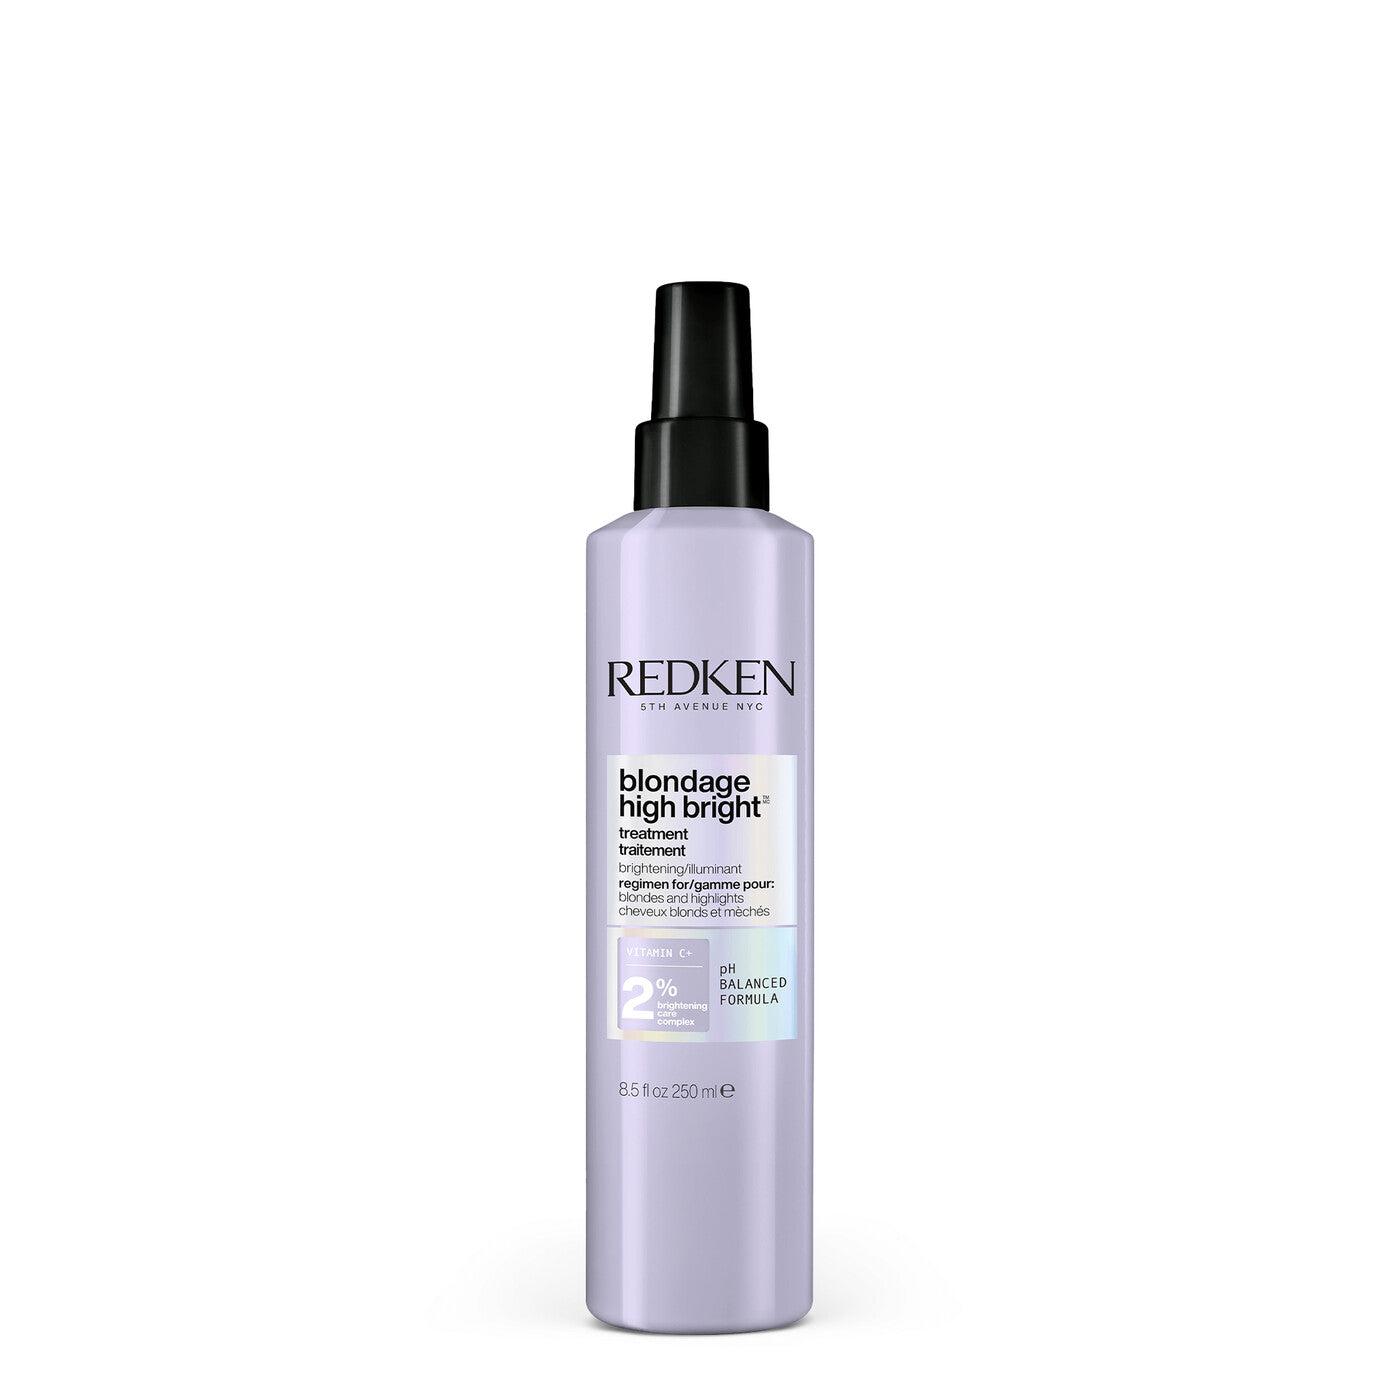 Redken Blondage High Bright Pre-shampoo Treatment 250ml